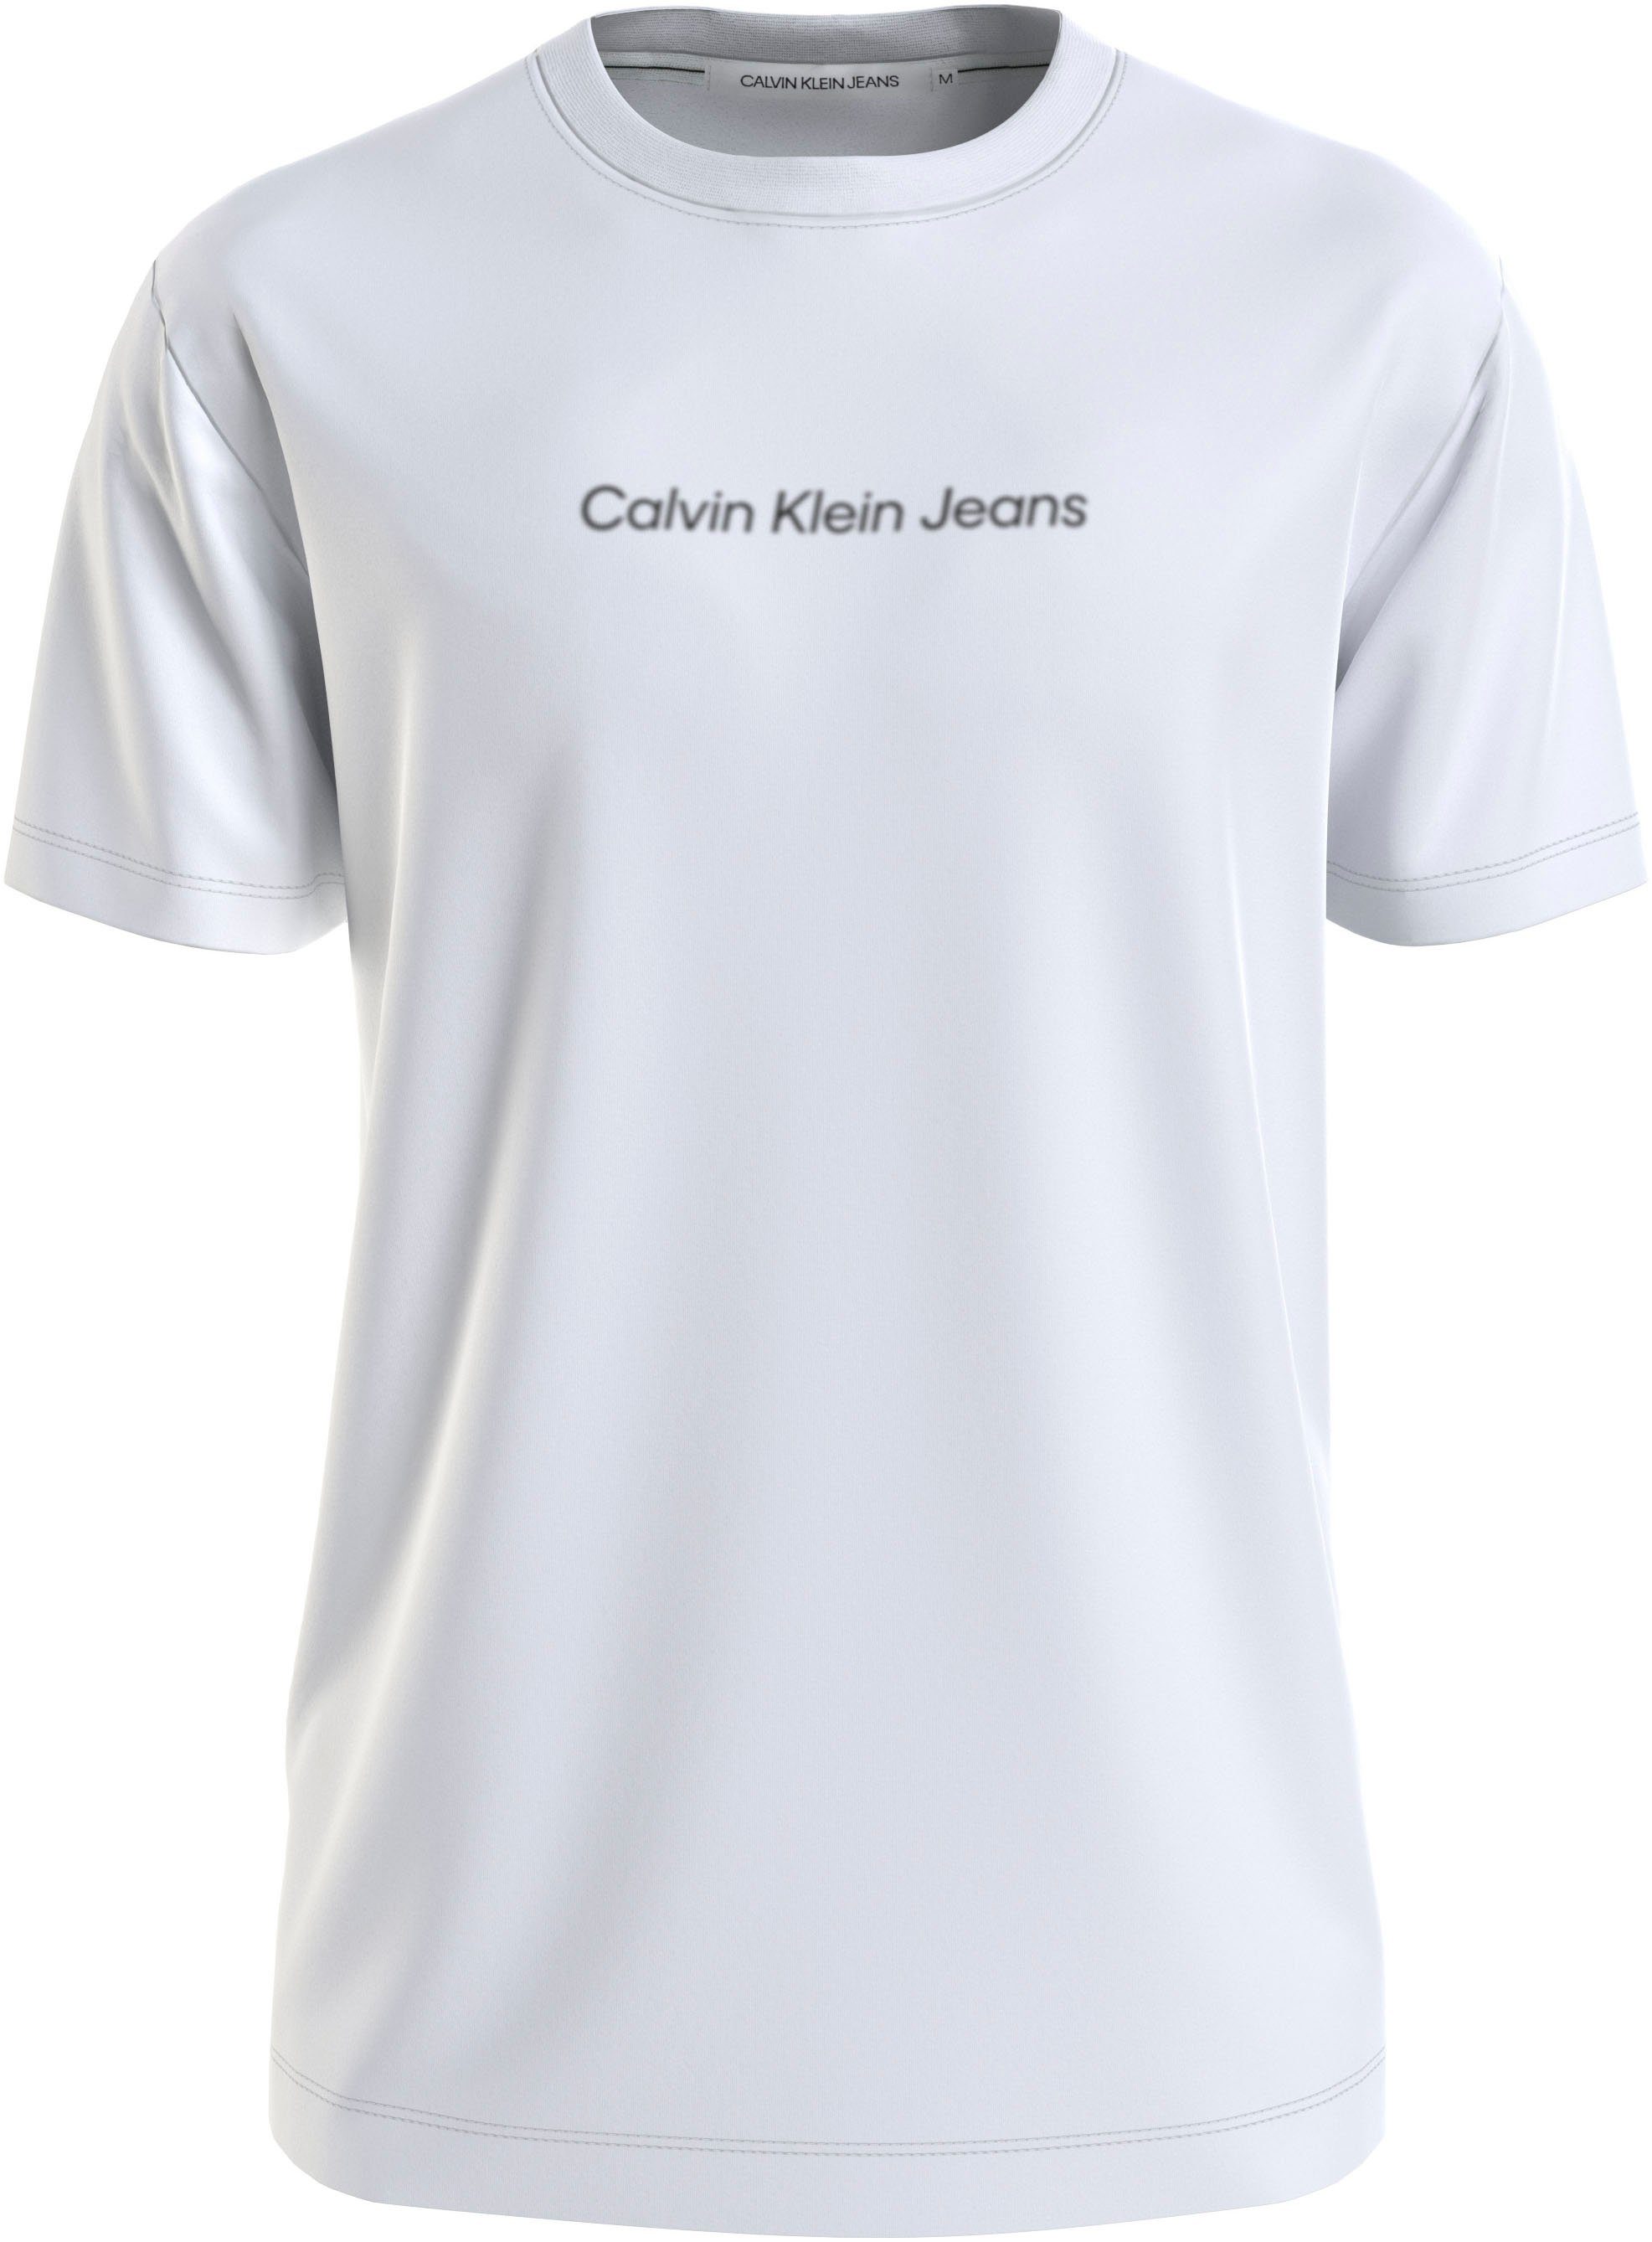 Calvin Klein Jeans Bright MIRRORED TEE CK White T-Shirt LOGO